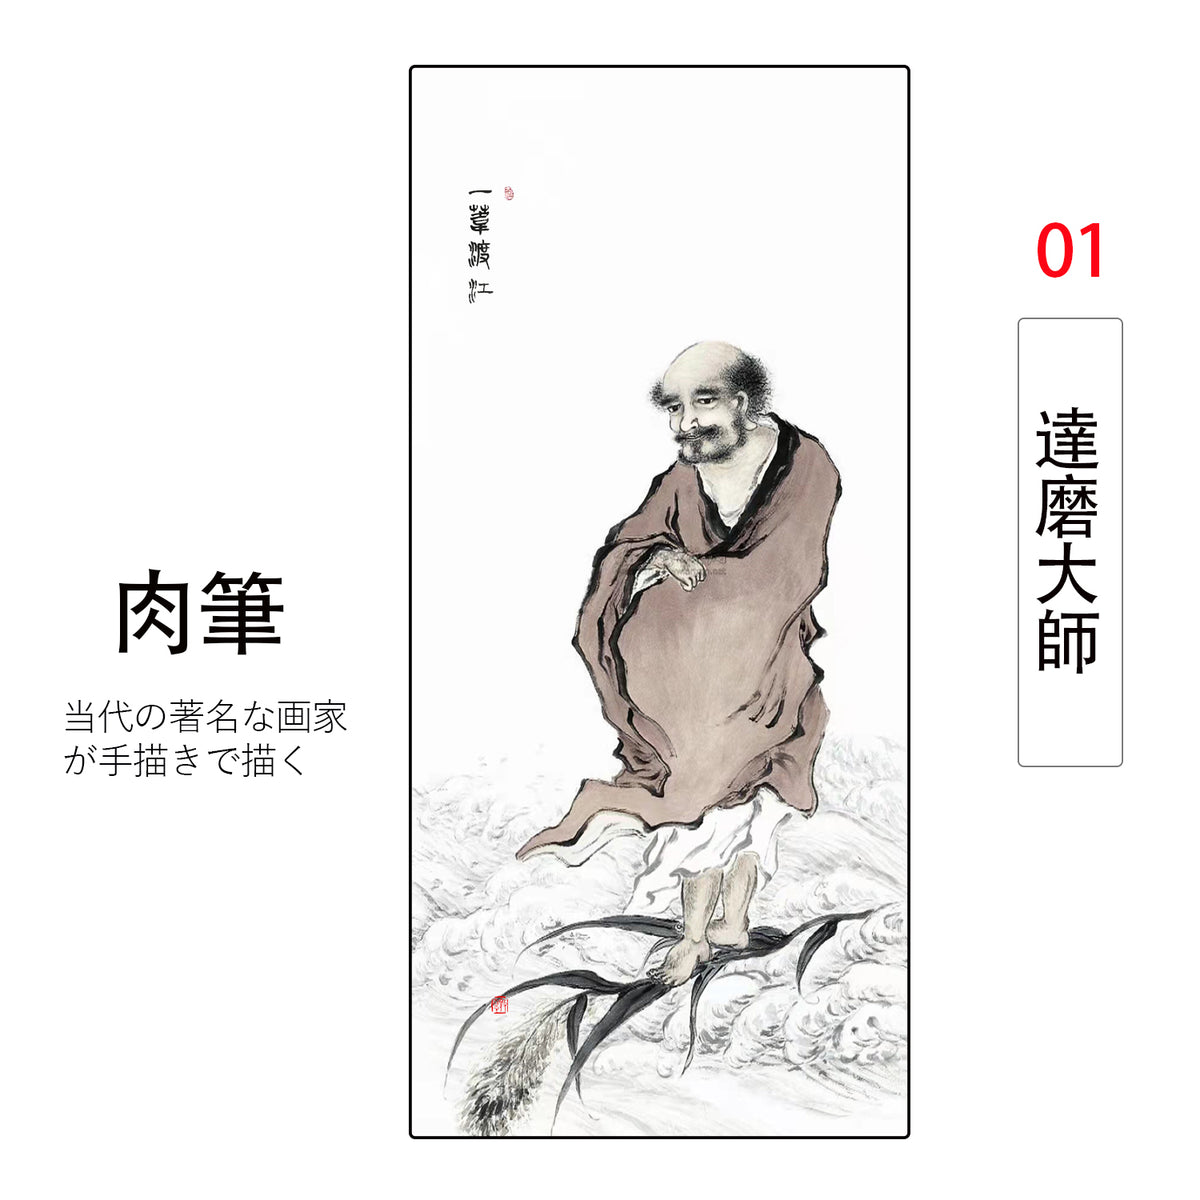 【菩提達磨大師】水墨人物画 仏画 掛け軸 掛軸 画家の手描き中国 